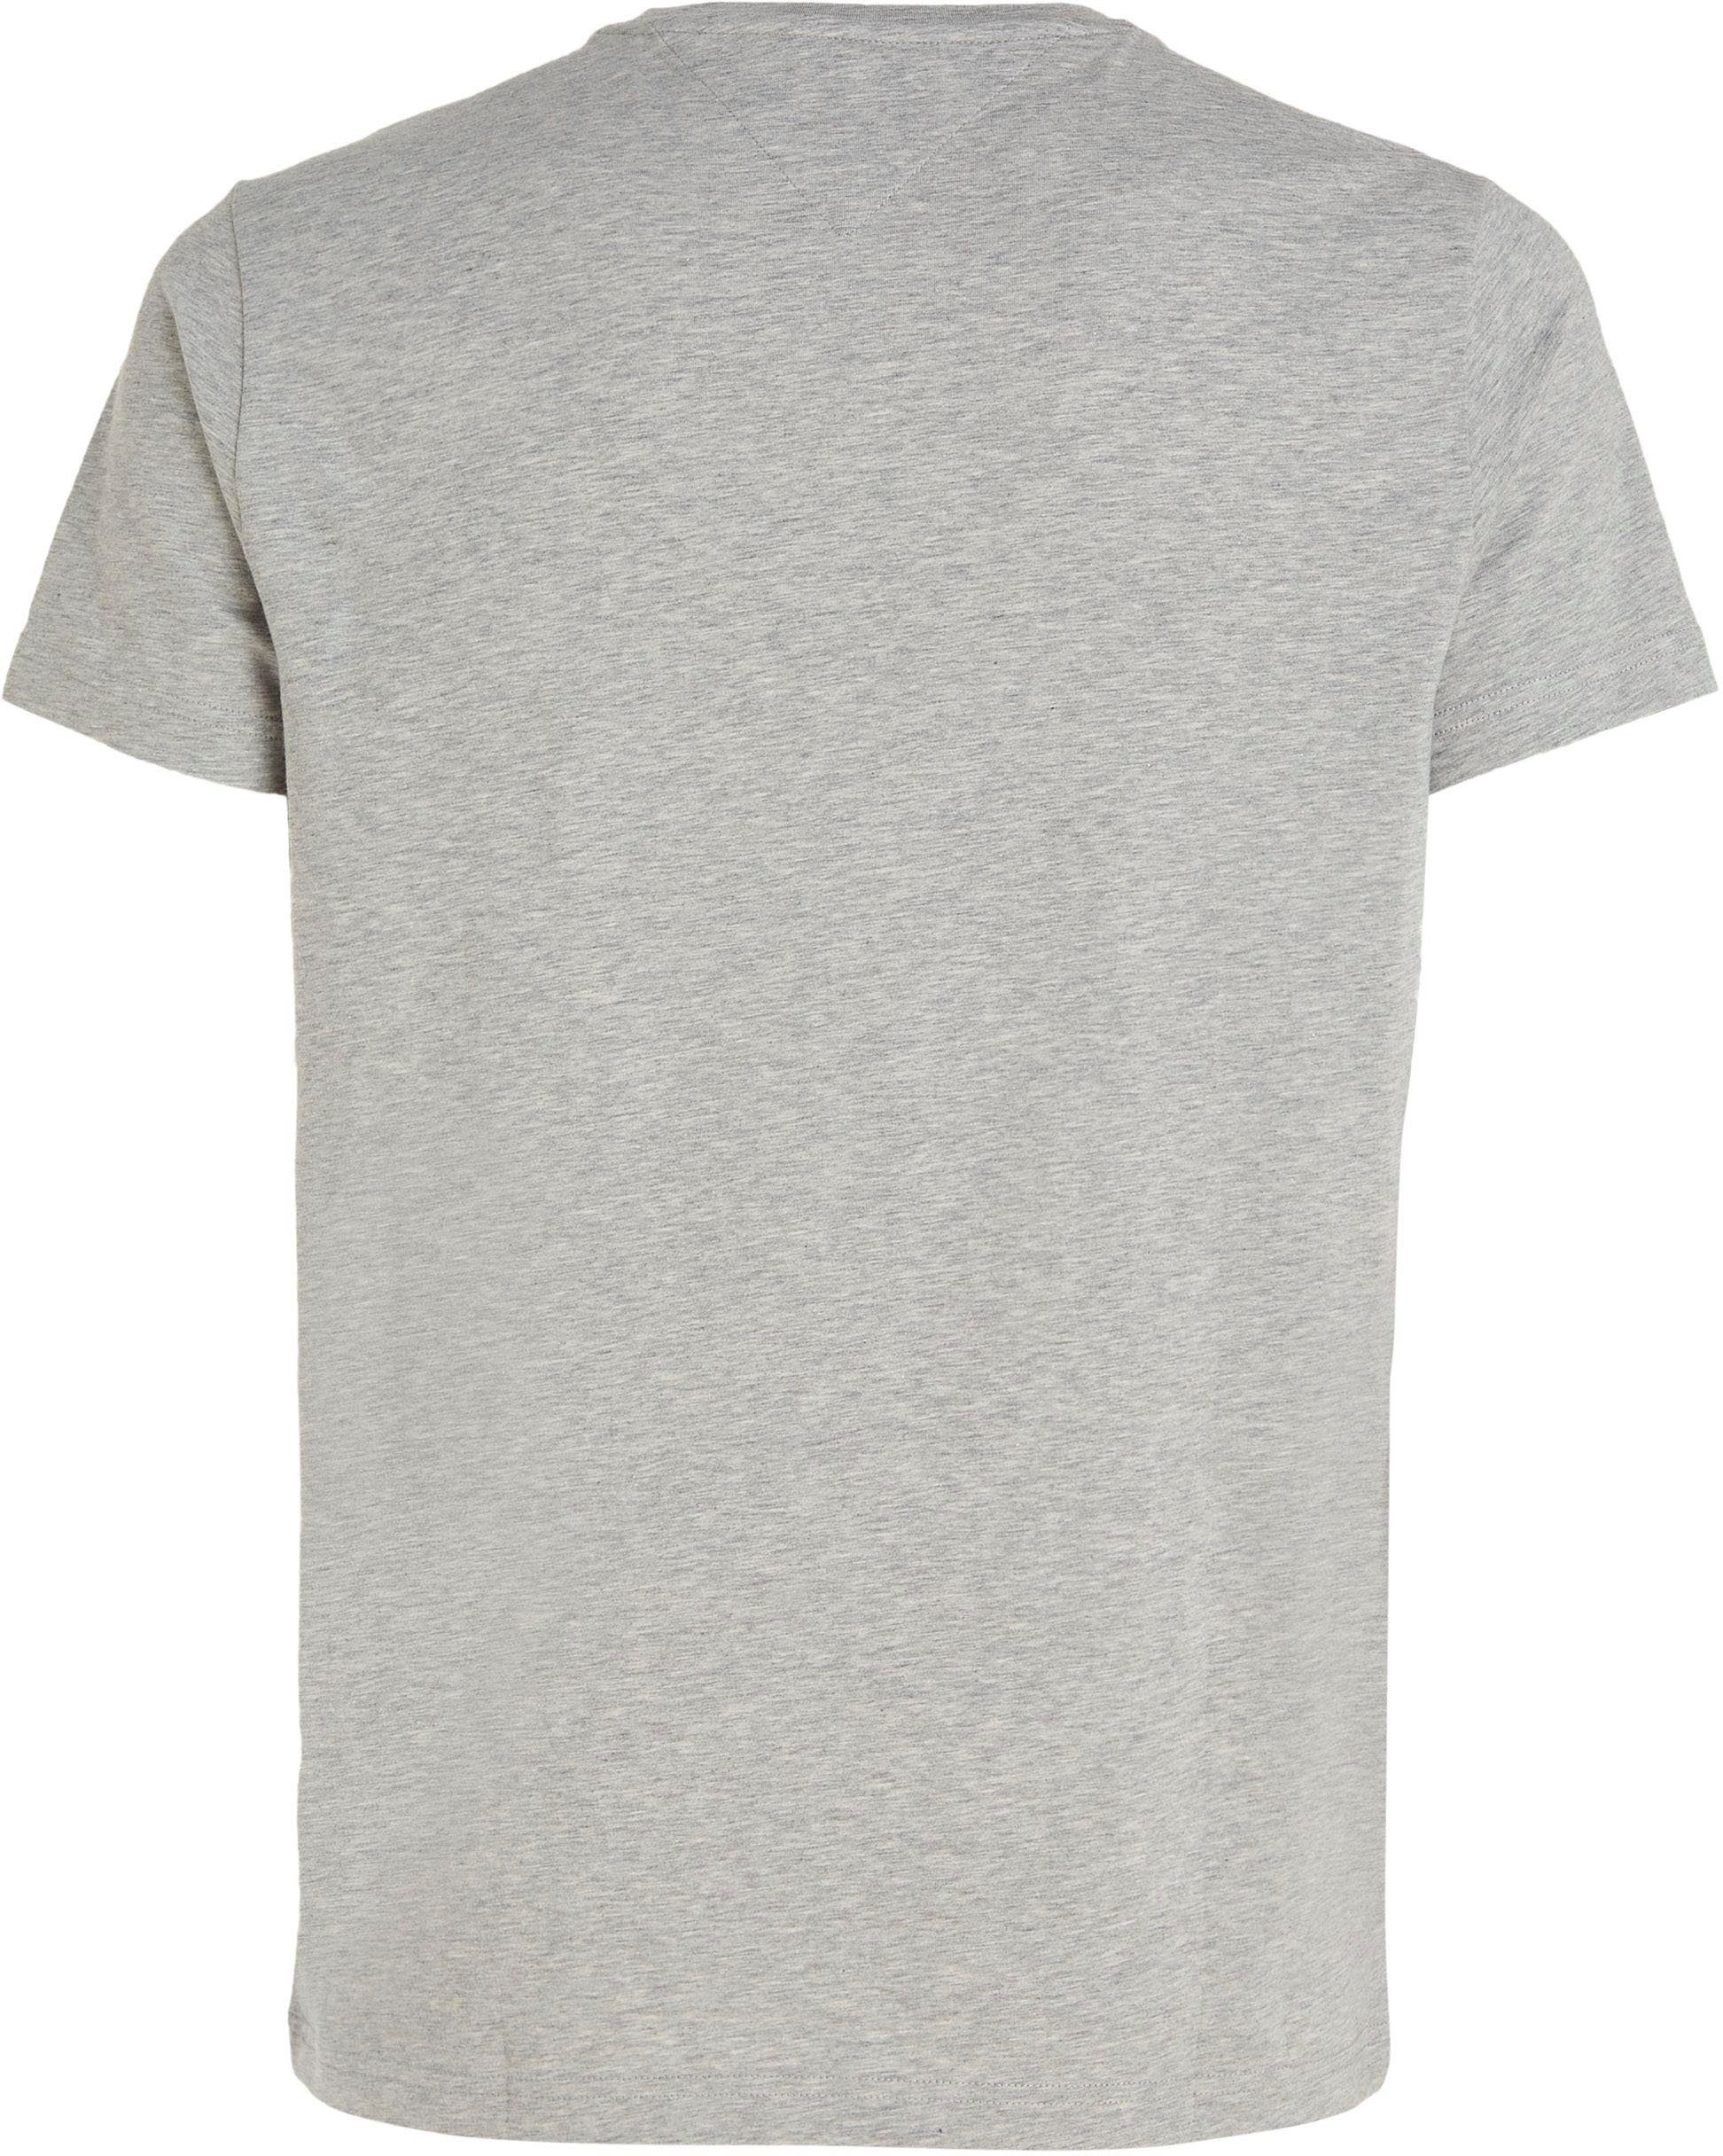 T-Shirt grey T-Shirt Stretch RH Slim melange Tommy Hilfiger